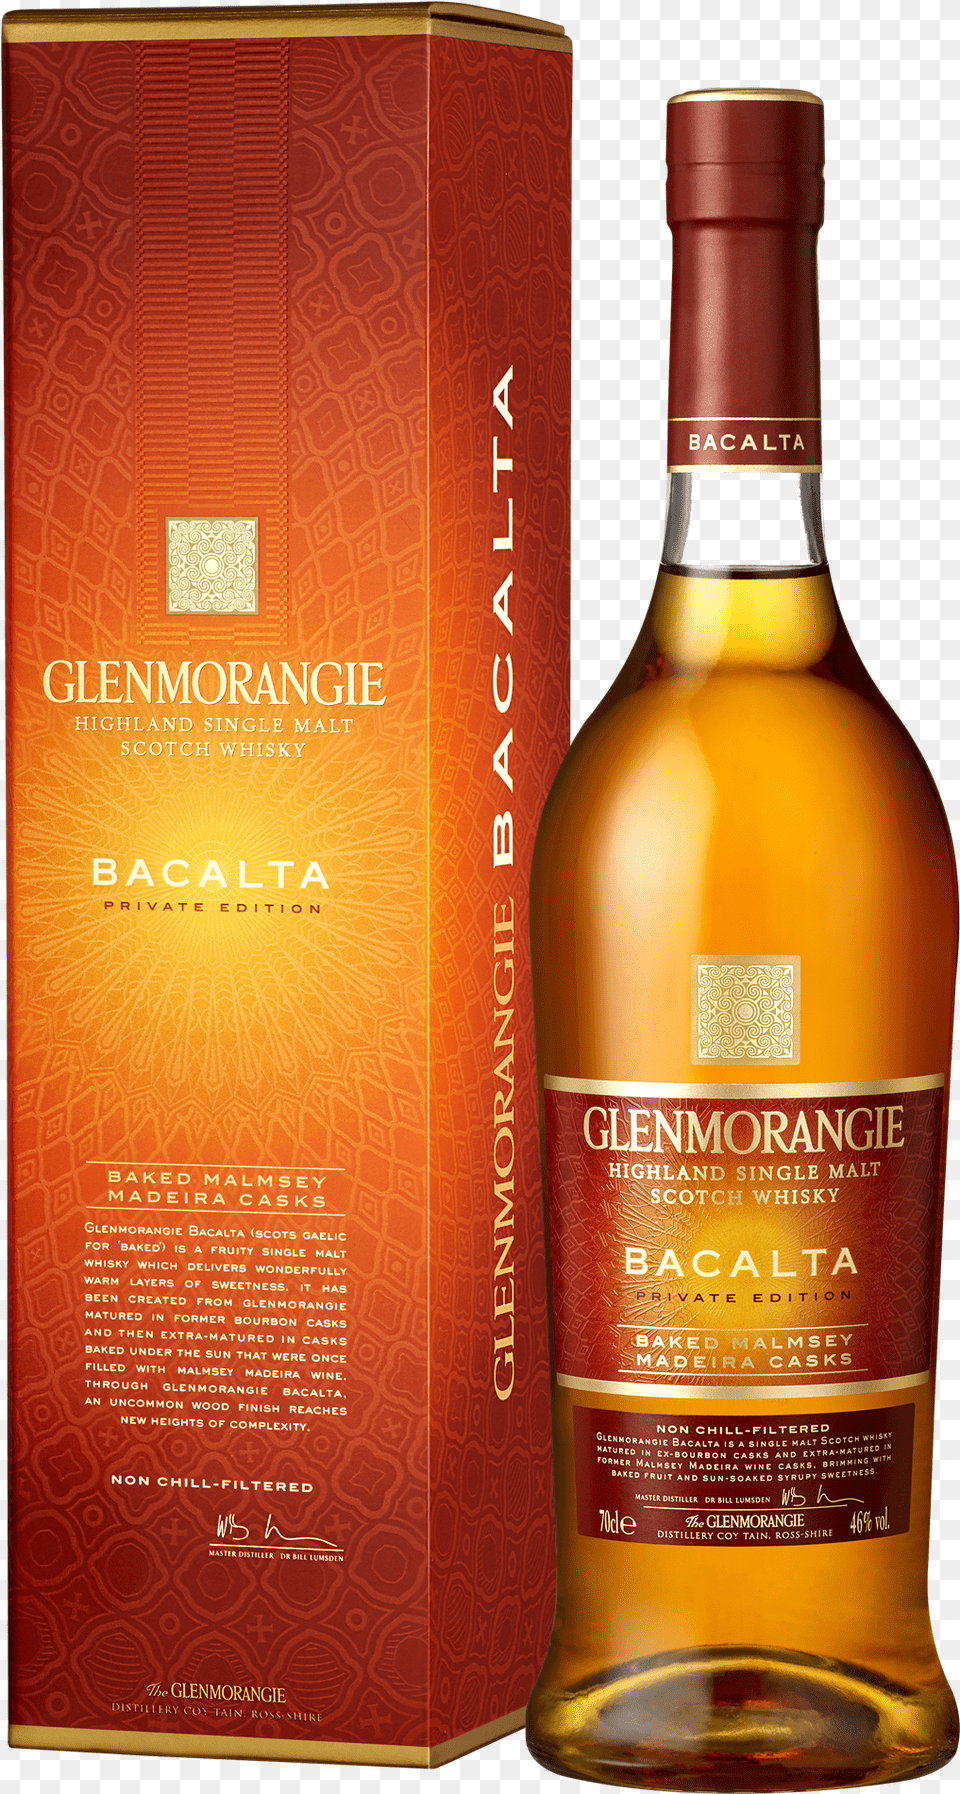 Glenmorangie Bacalta Packshot Transparent Background Glenmorangie Bacalta Highland Single Malt Scotch Whisky, Alcohol, Beverage, Liquor, Beer Free Png